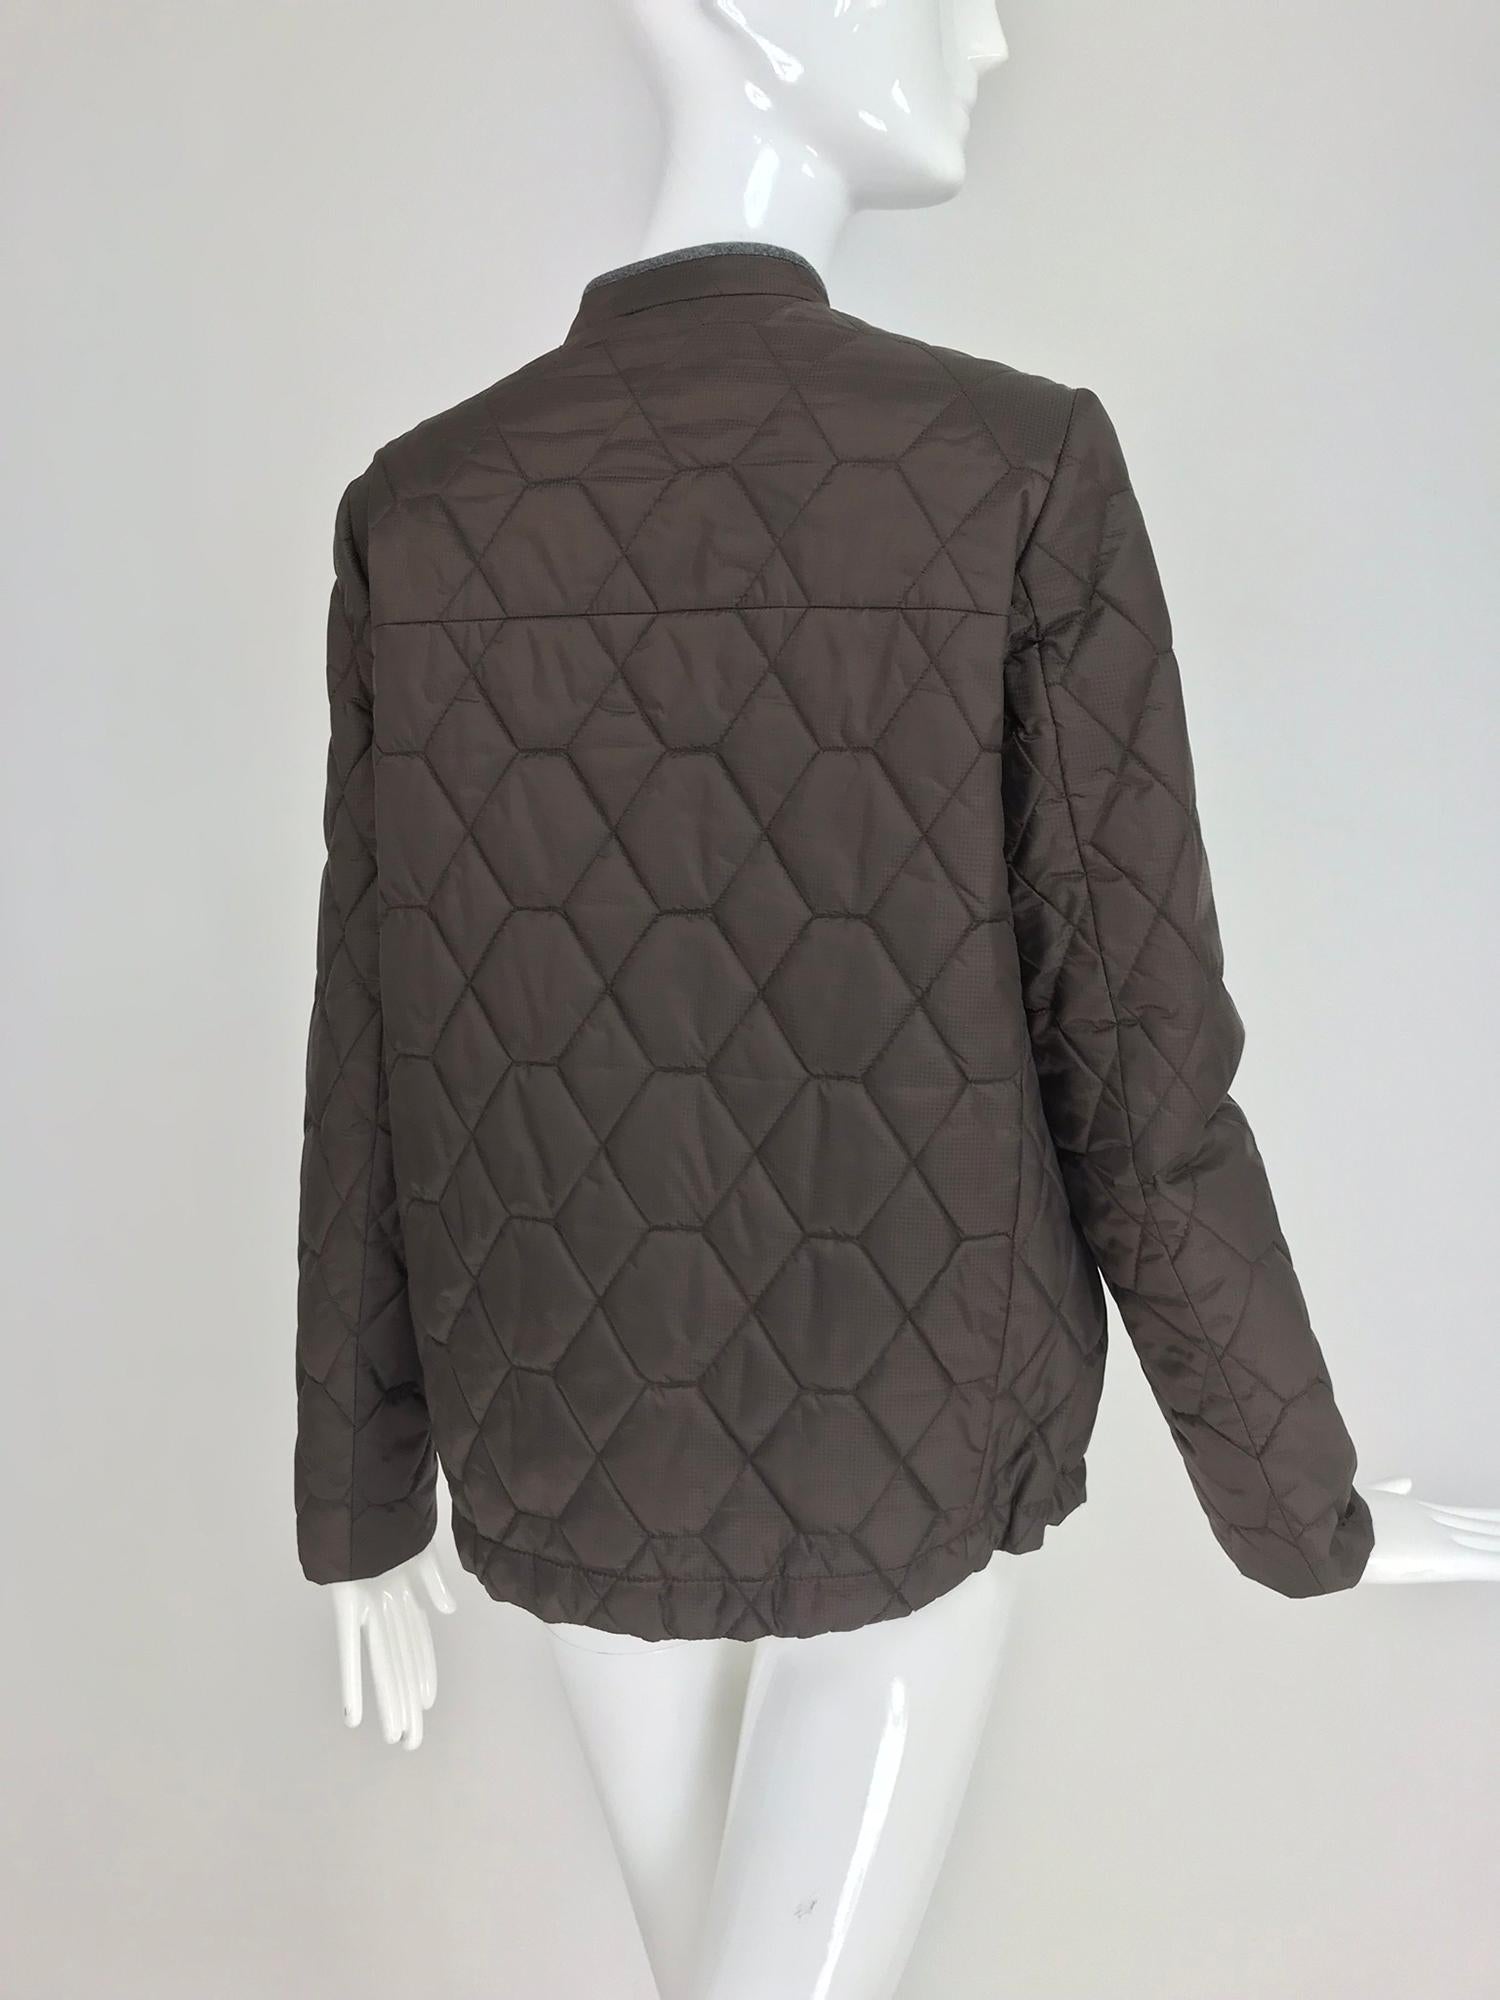 Brunello Cucinelli Chocolate Brown geometric pattern Quilted Sport Jacket 42 3